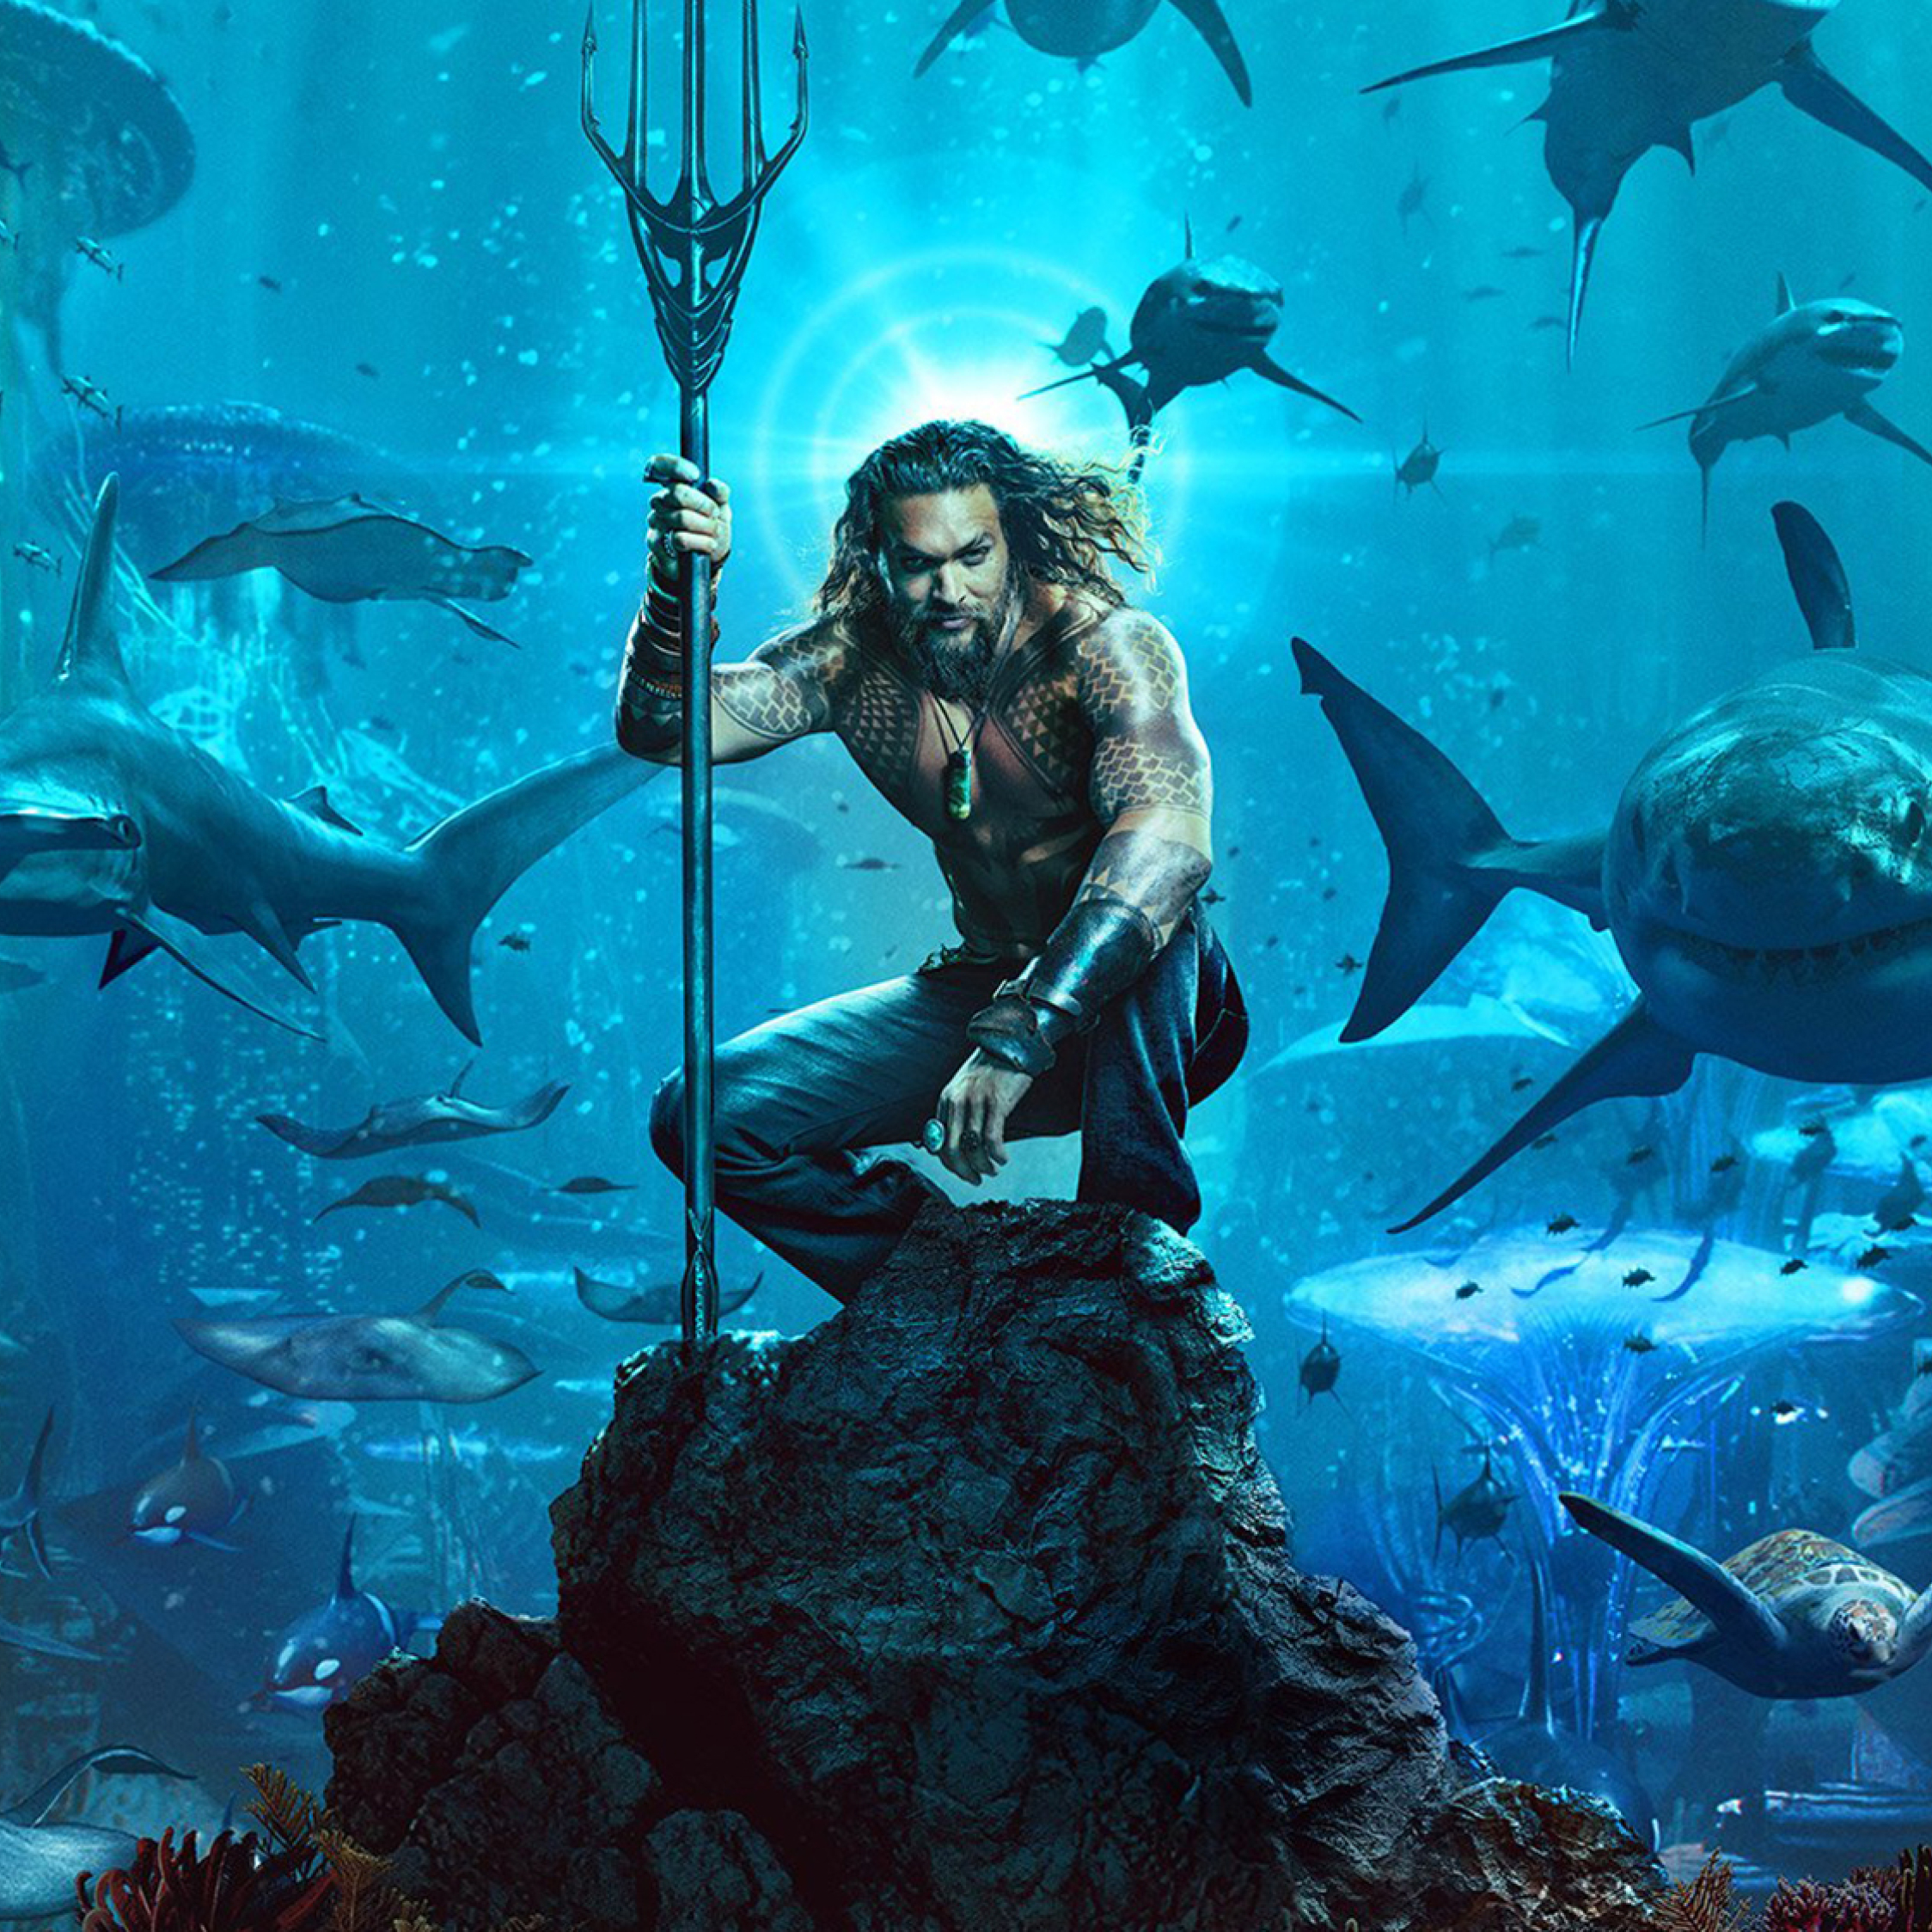 2248x2248 Aquaman 2018 Movie Poster 2248x2248 Resolution Wallpaper, HD